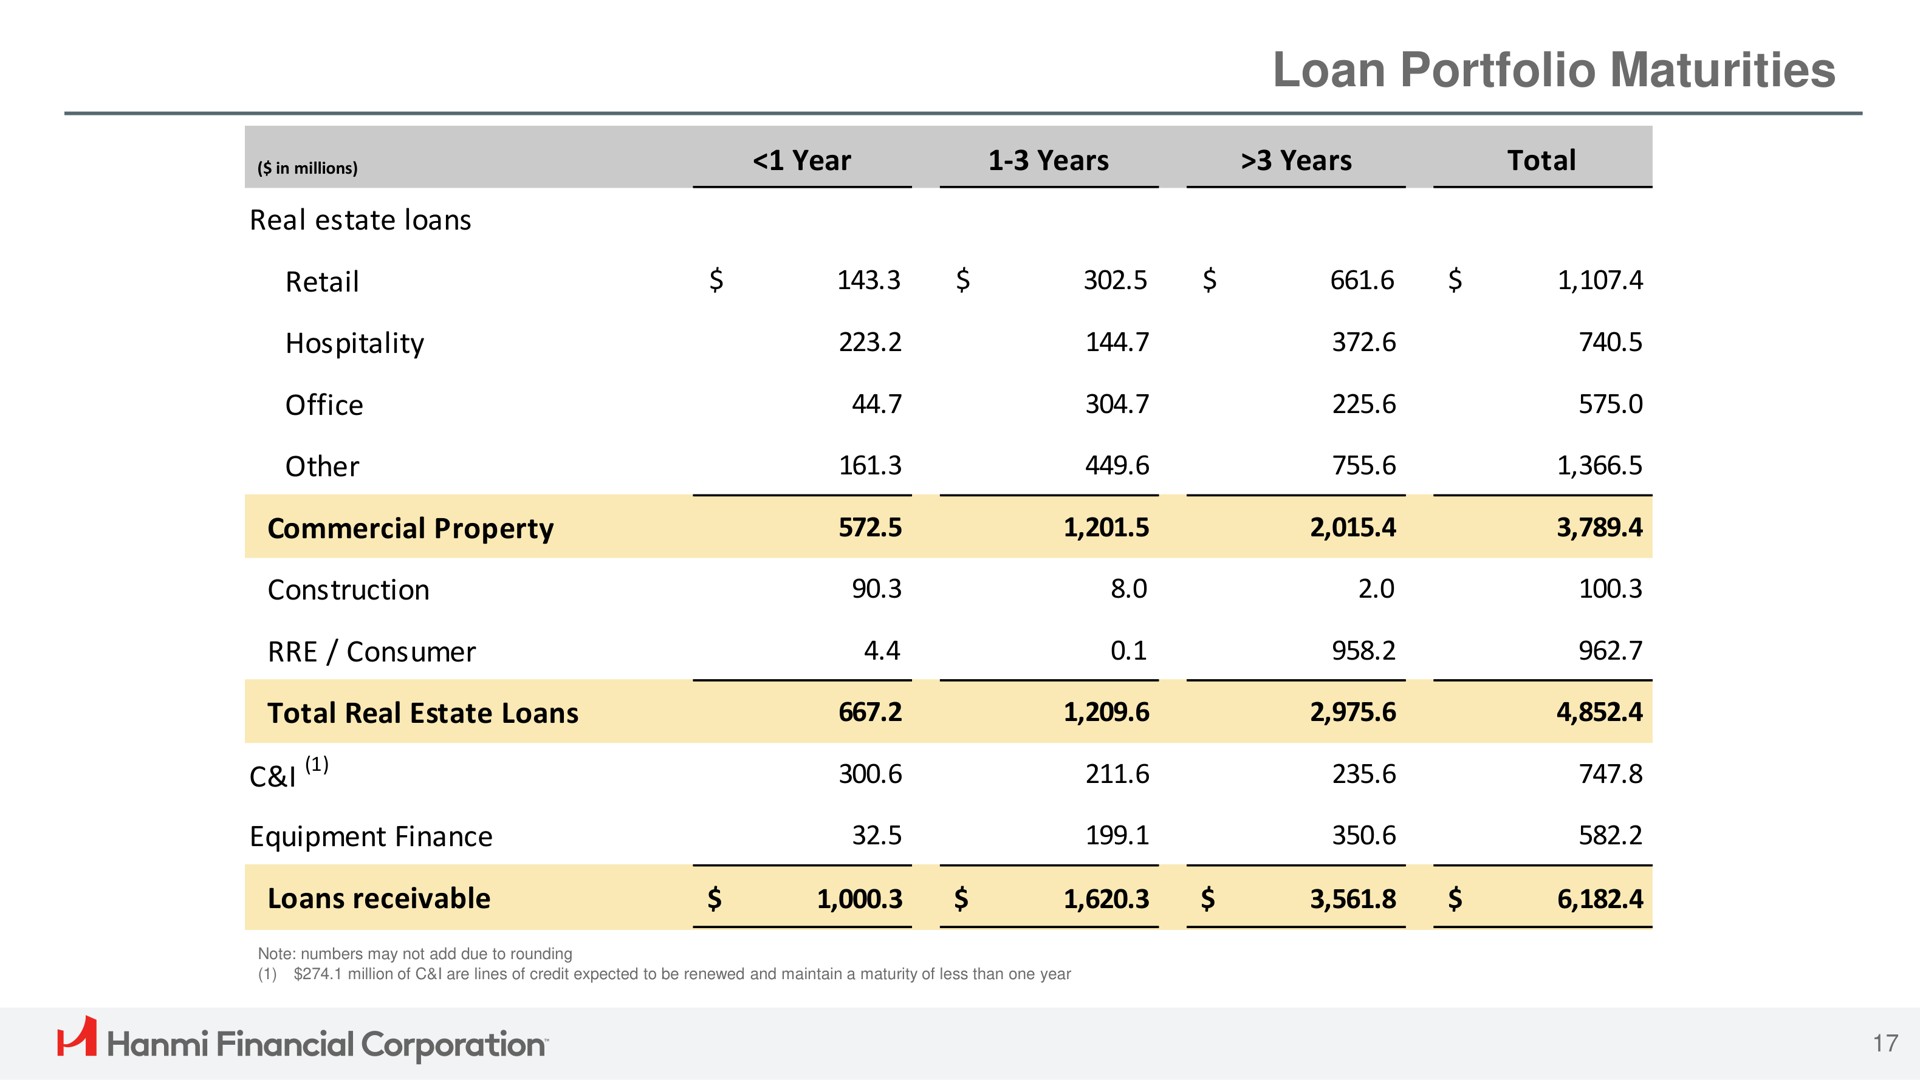 loan portfolio maturities cay a financial corporation | Hanmi Financial